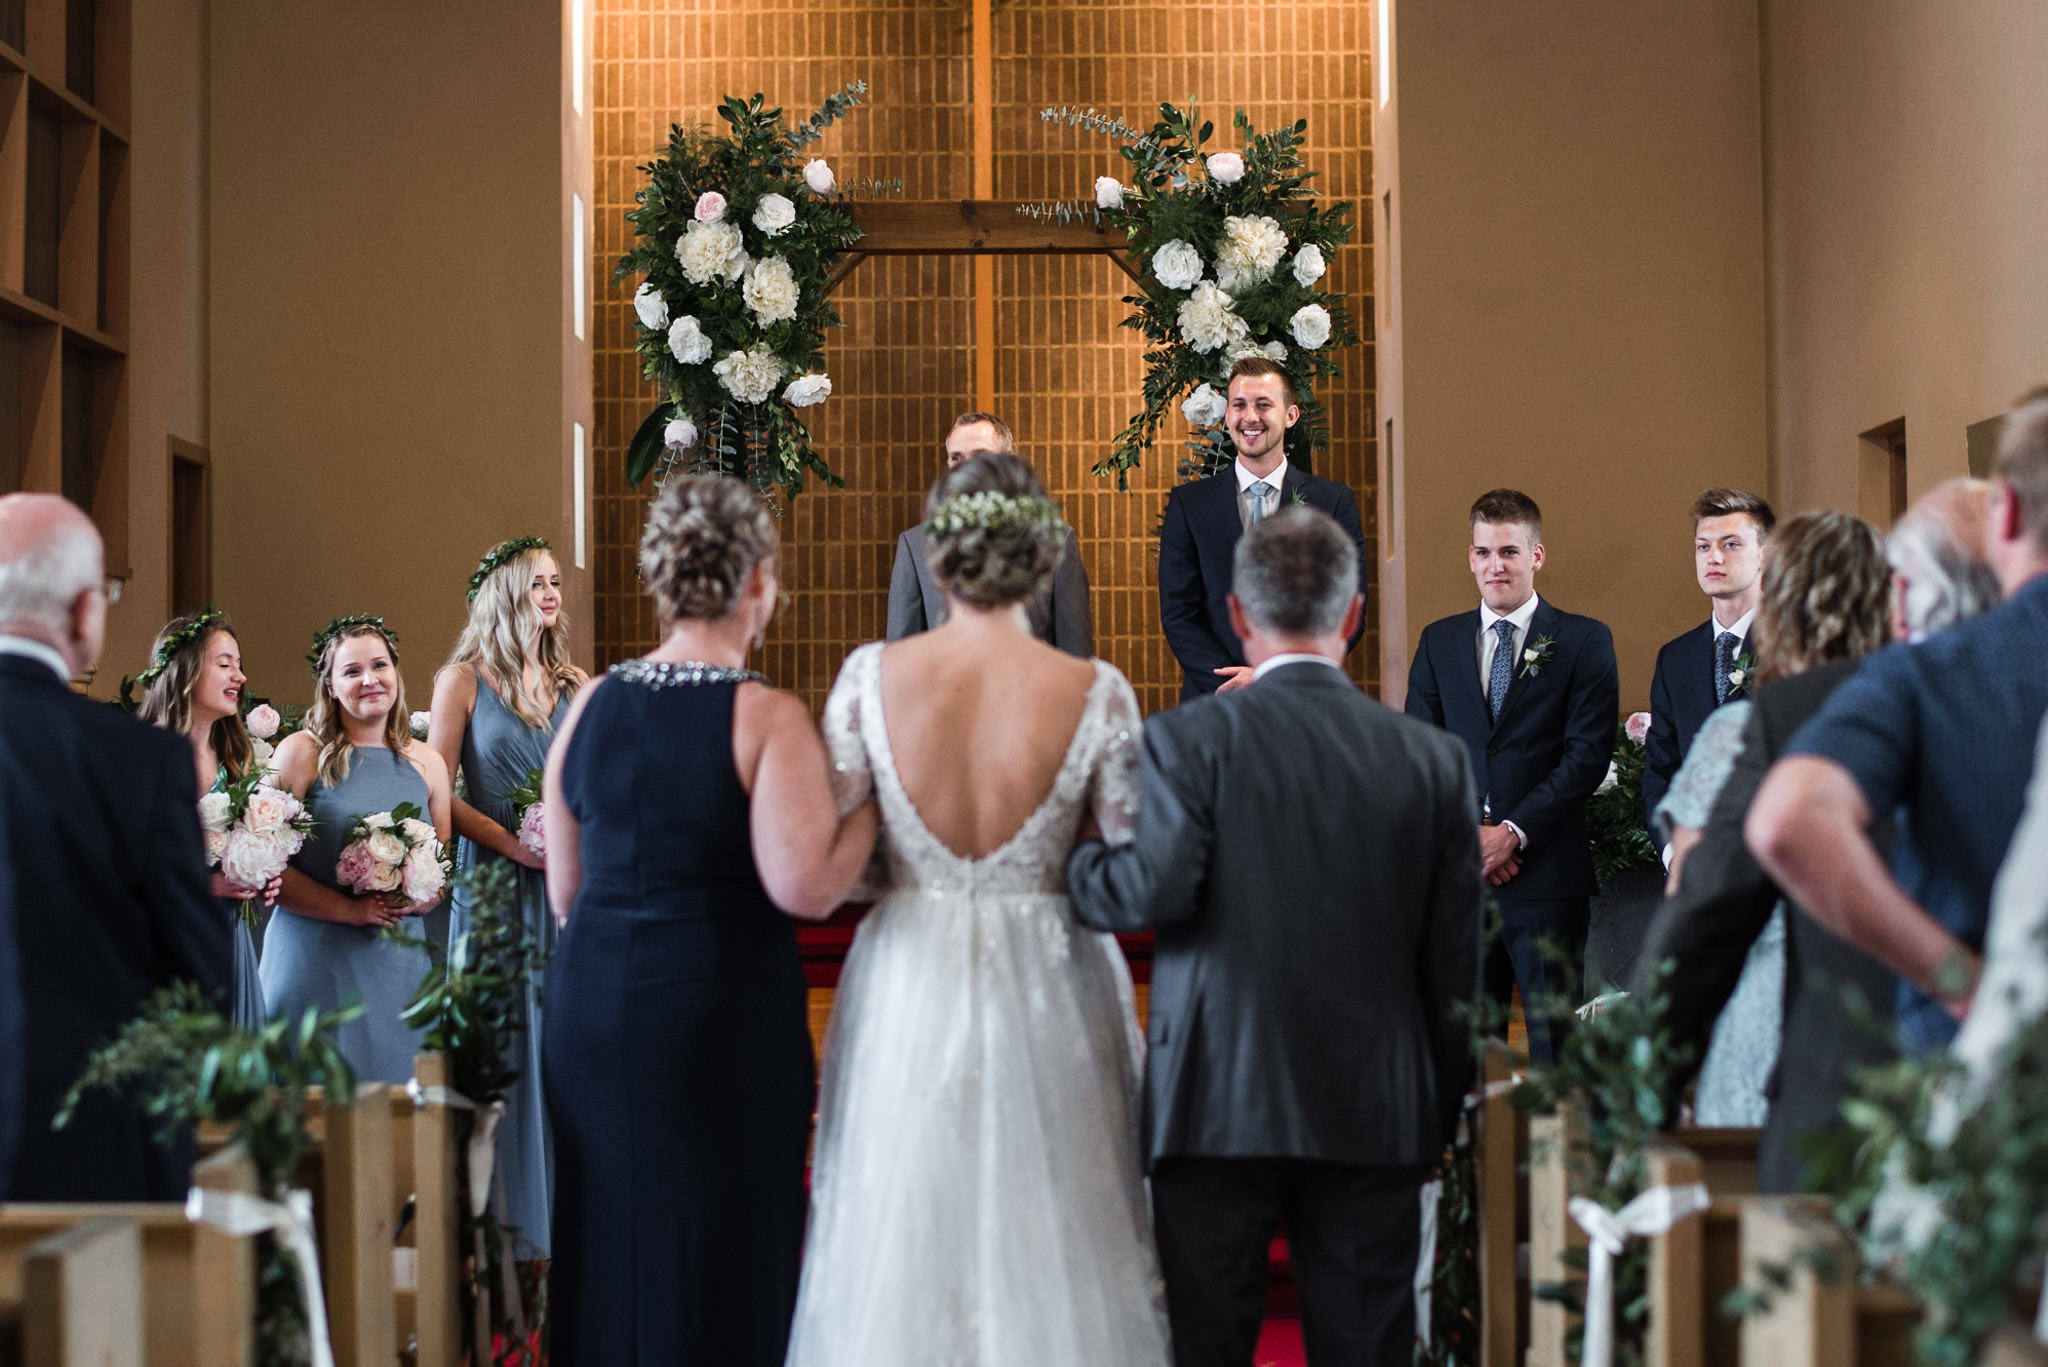 192-groom-reaction-seeing-bride-down-aisle-wedding-ceremony-wooden-arch.jpg